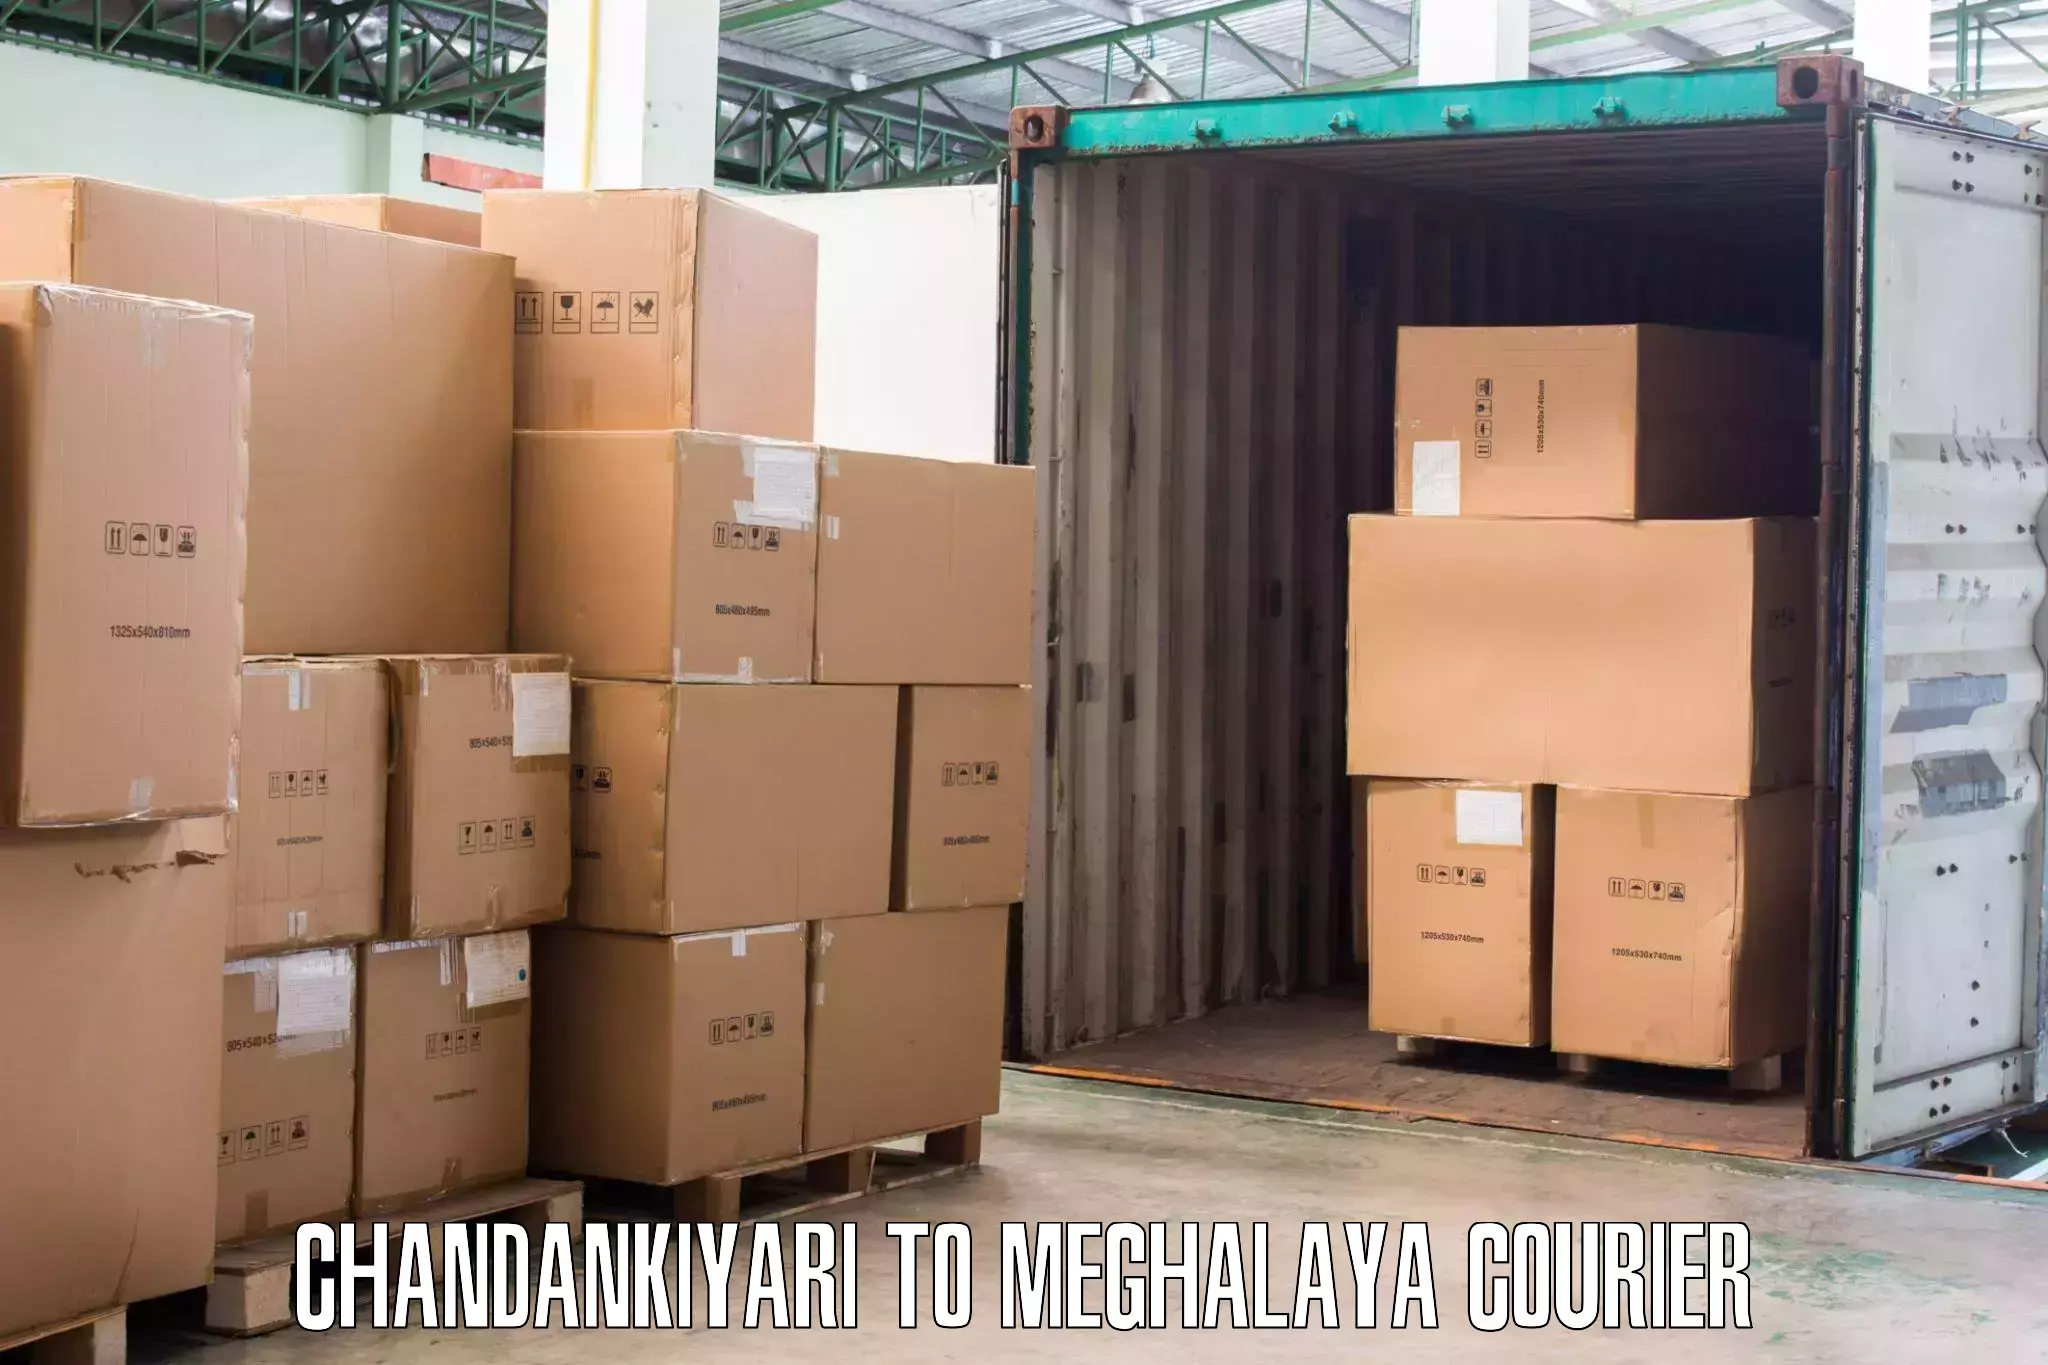 Furniture relocation experts Chandankiyari to Meghalaya